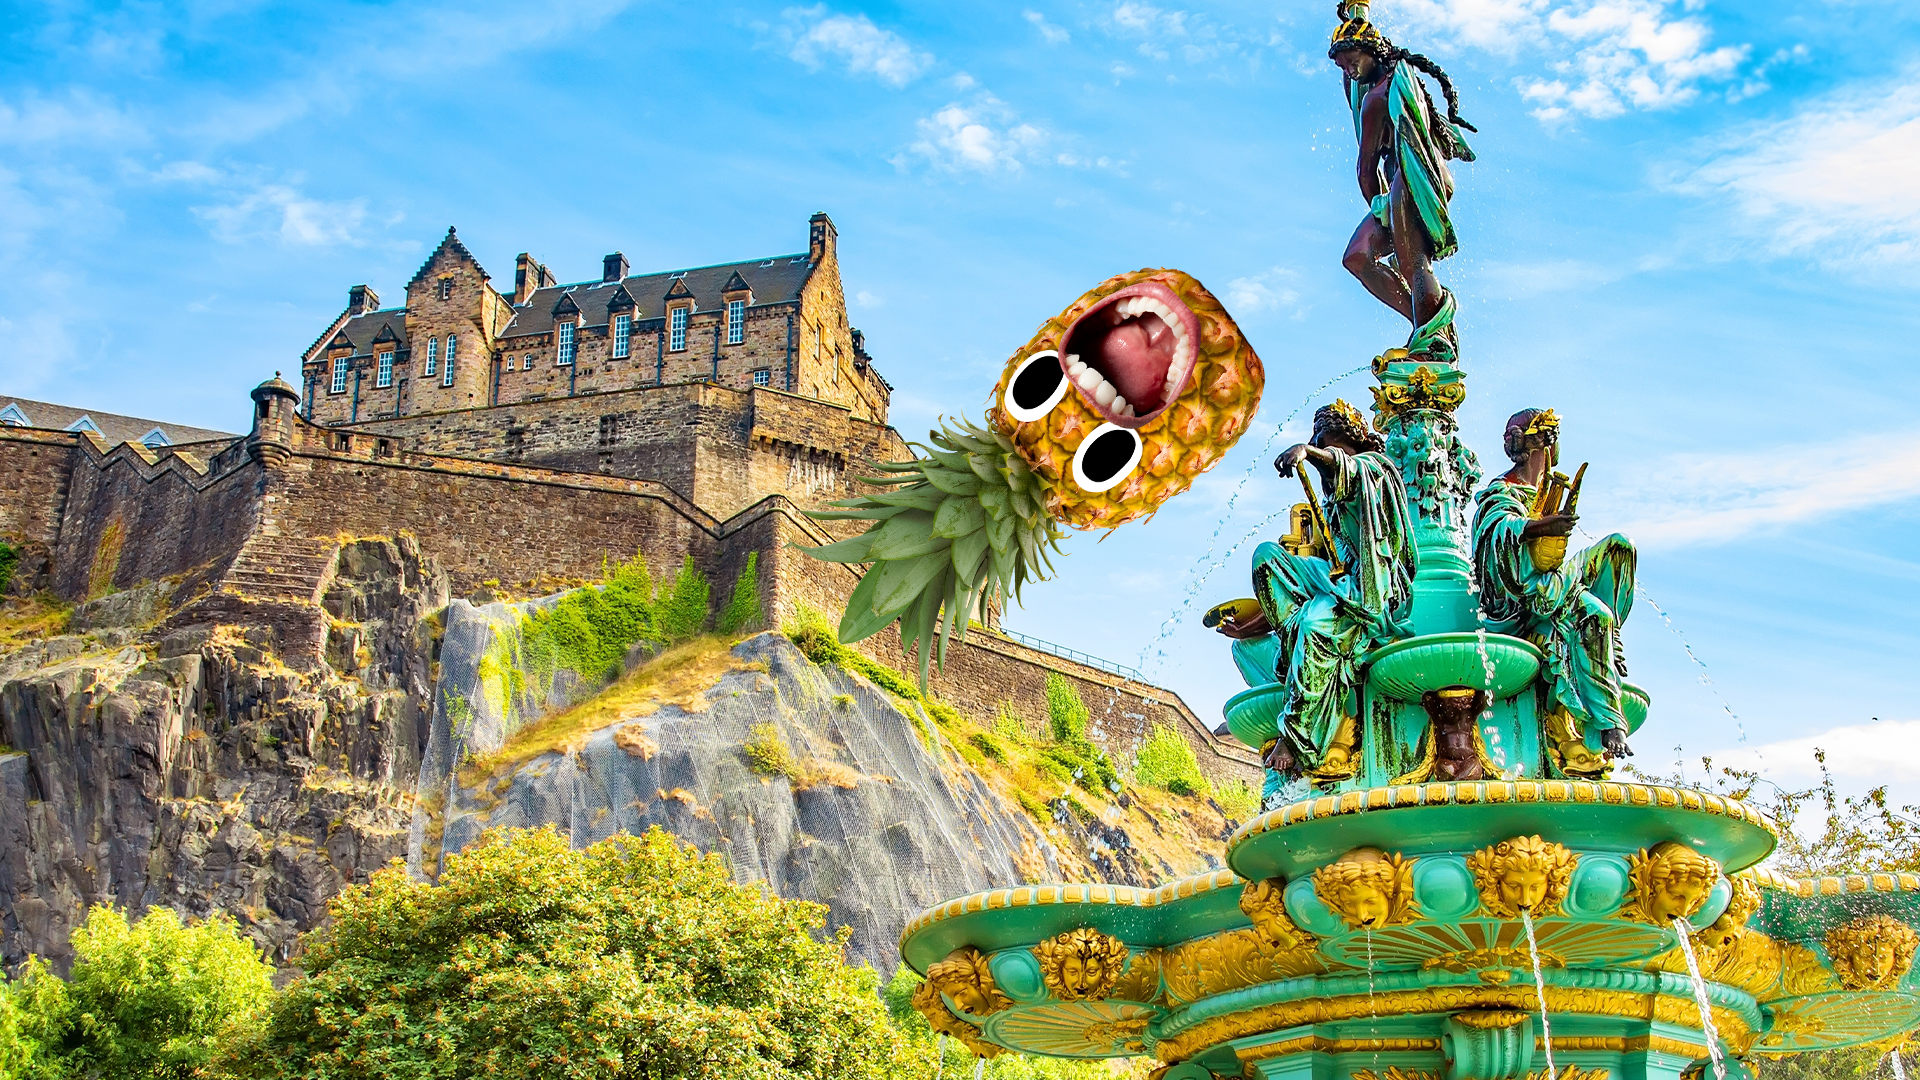 Edinburgh castle and screaming pineapple